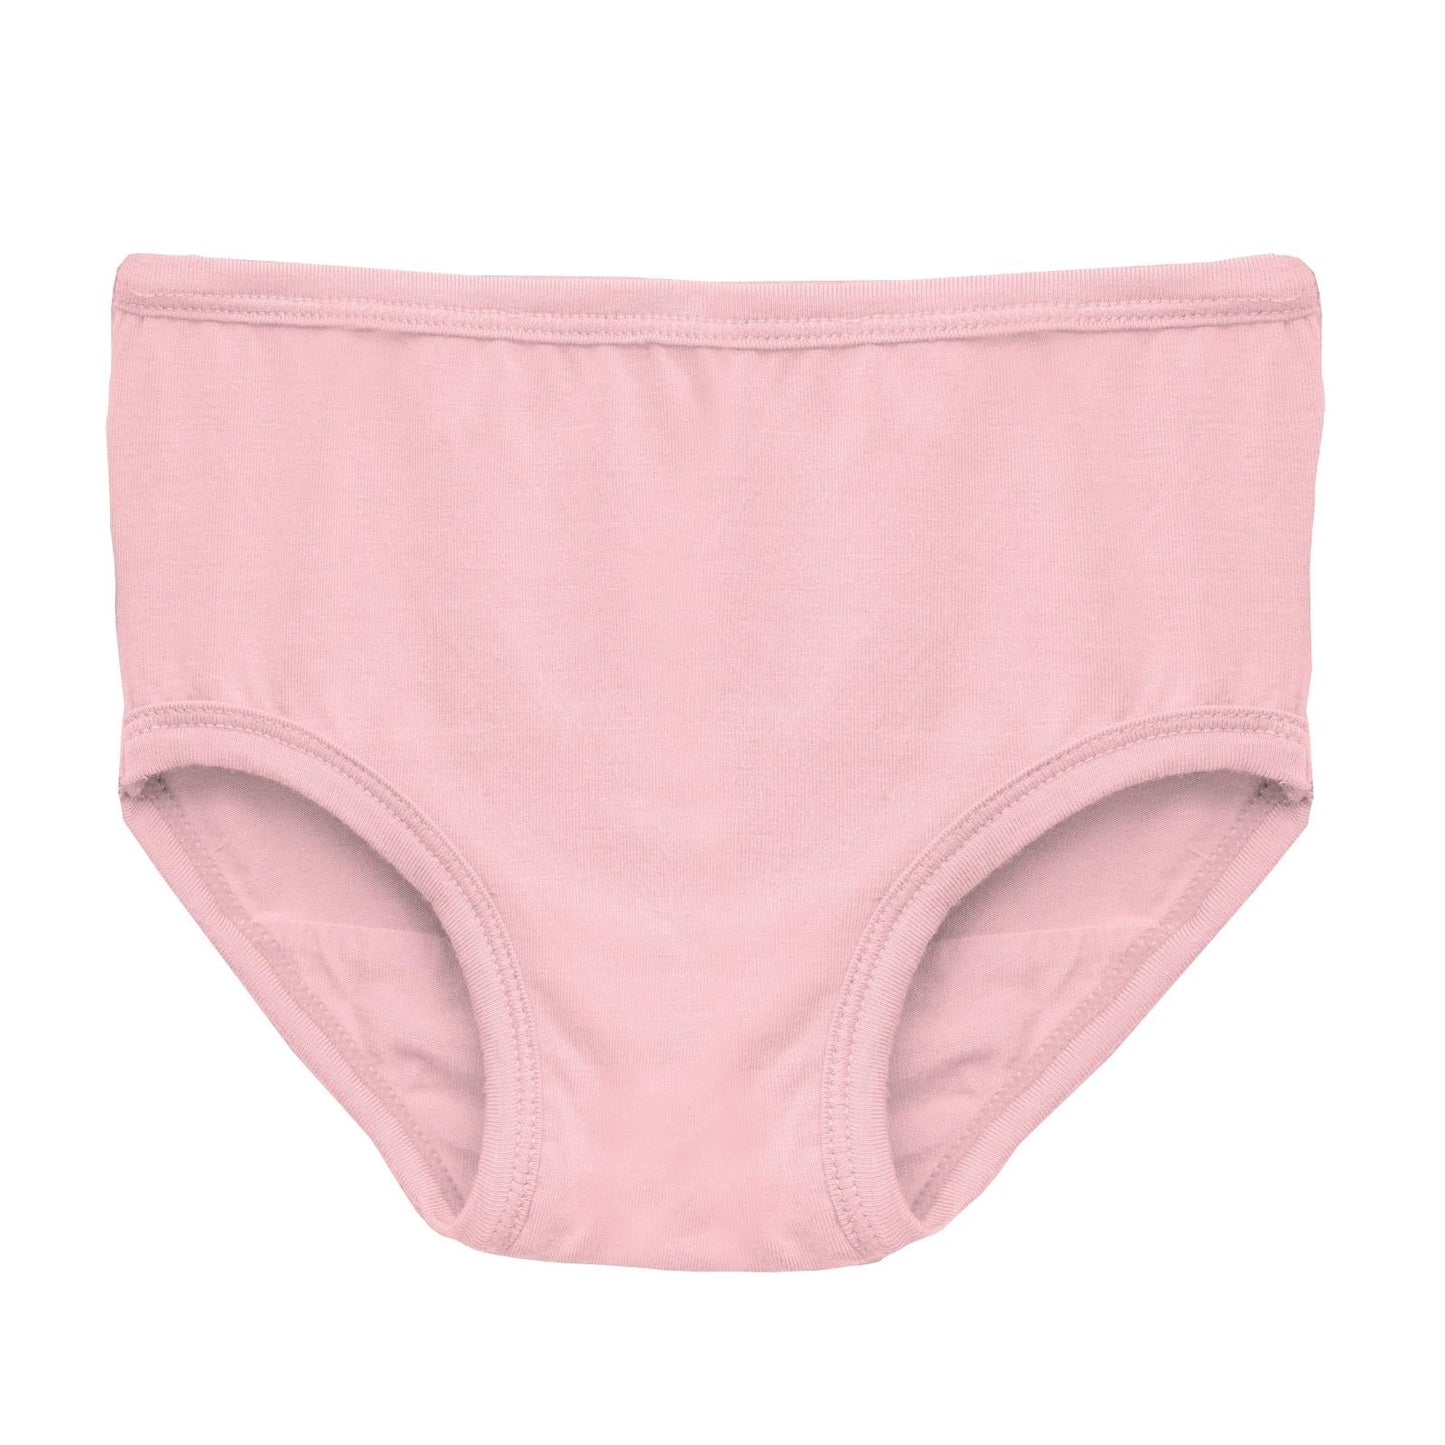 Kickee Lotus | Underwear